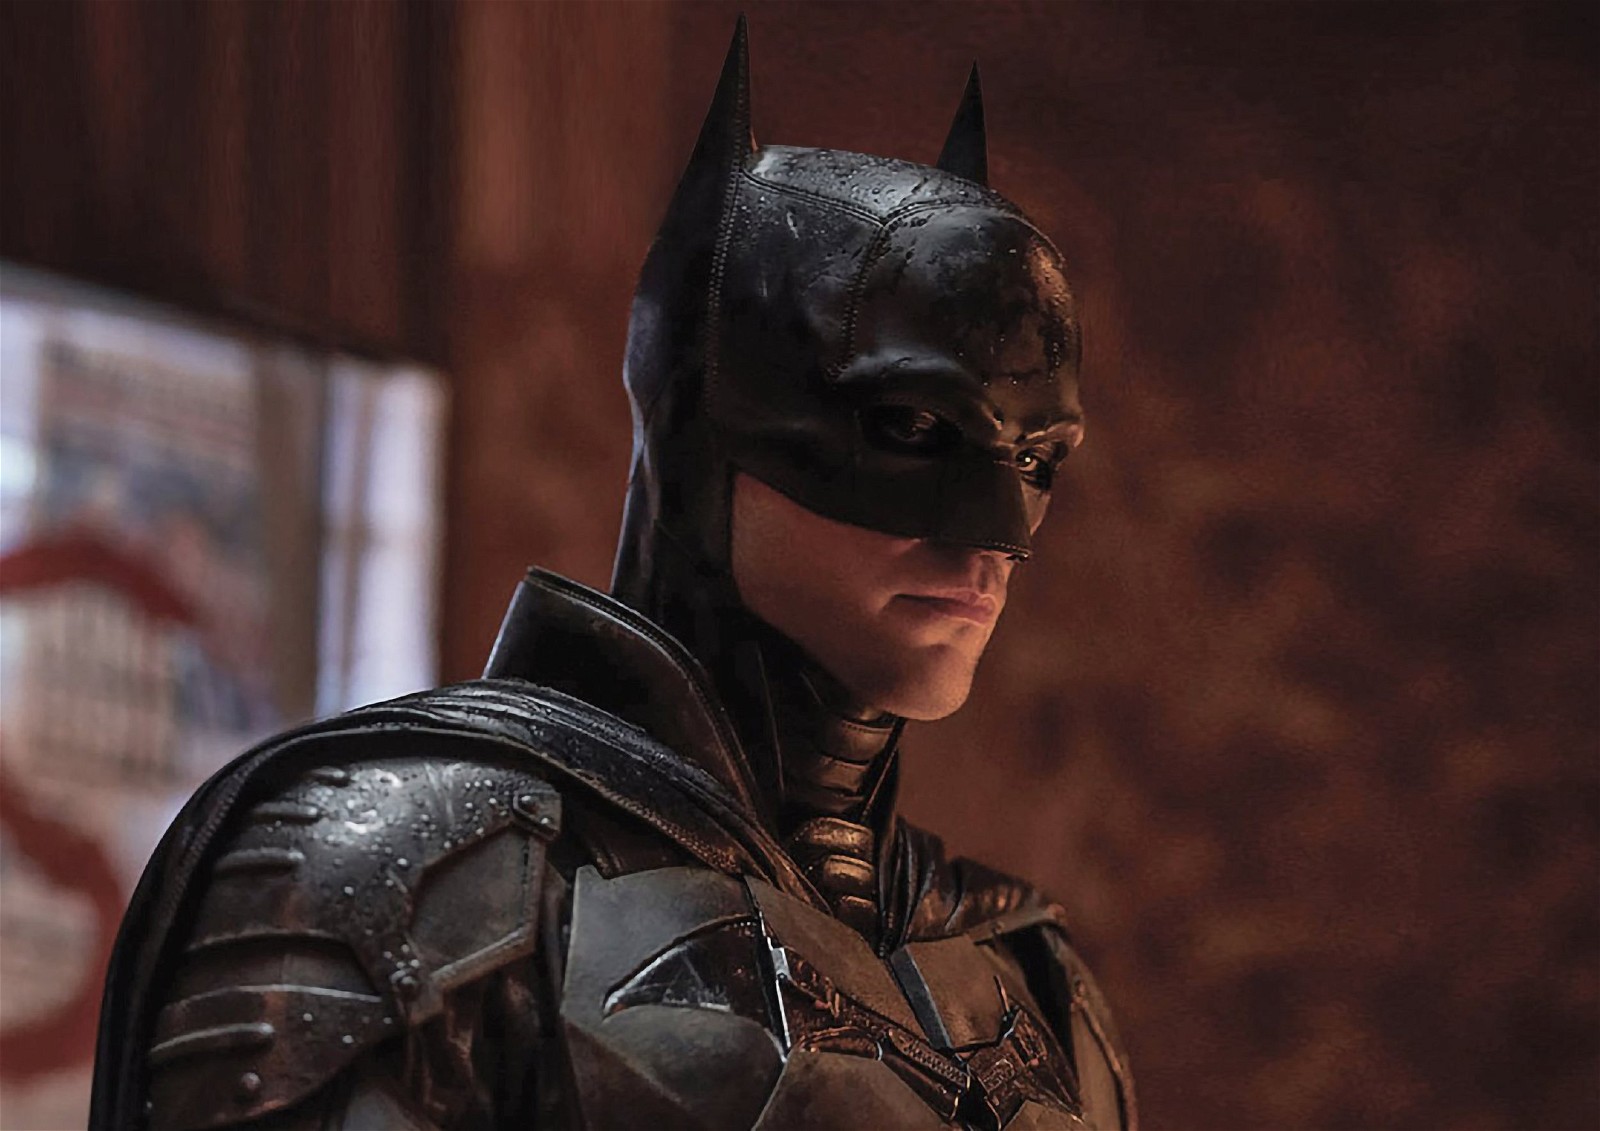 Robert Pattinson as Batman in The Batman